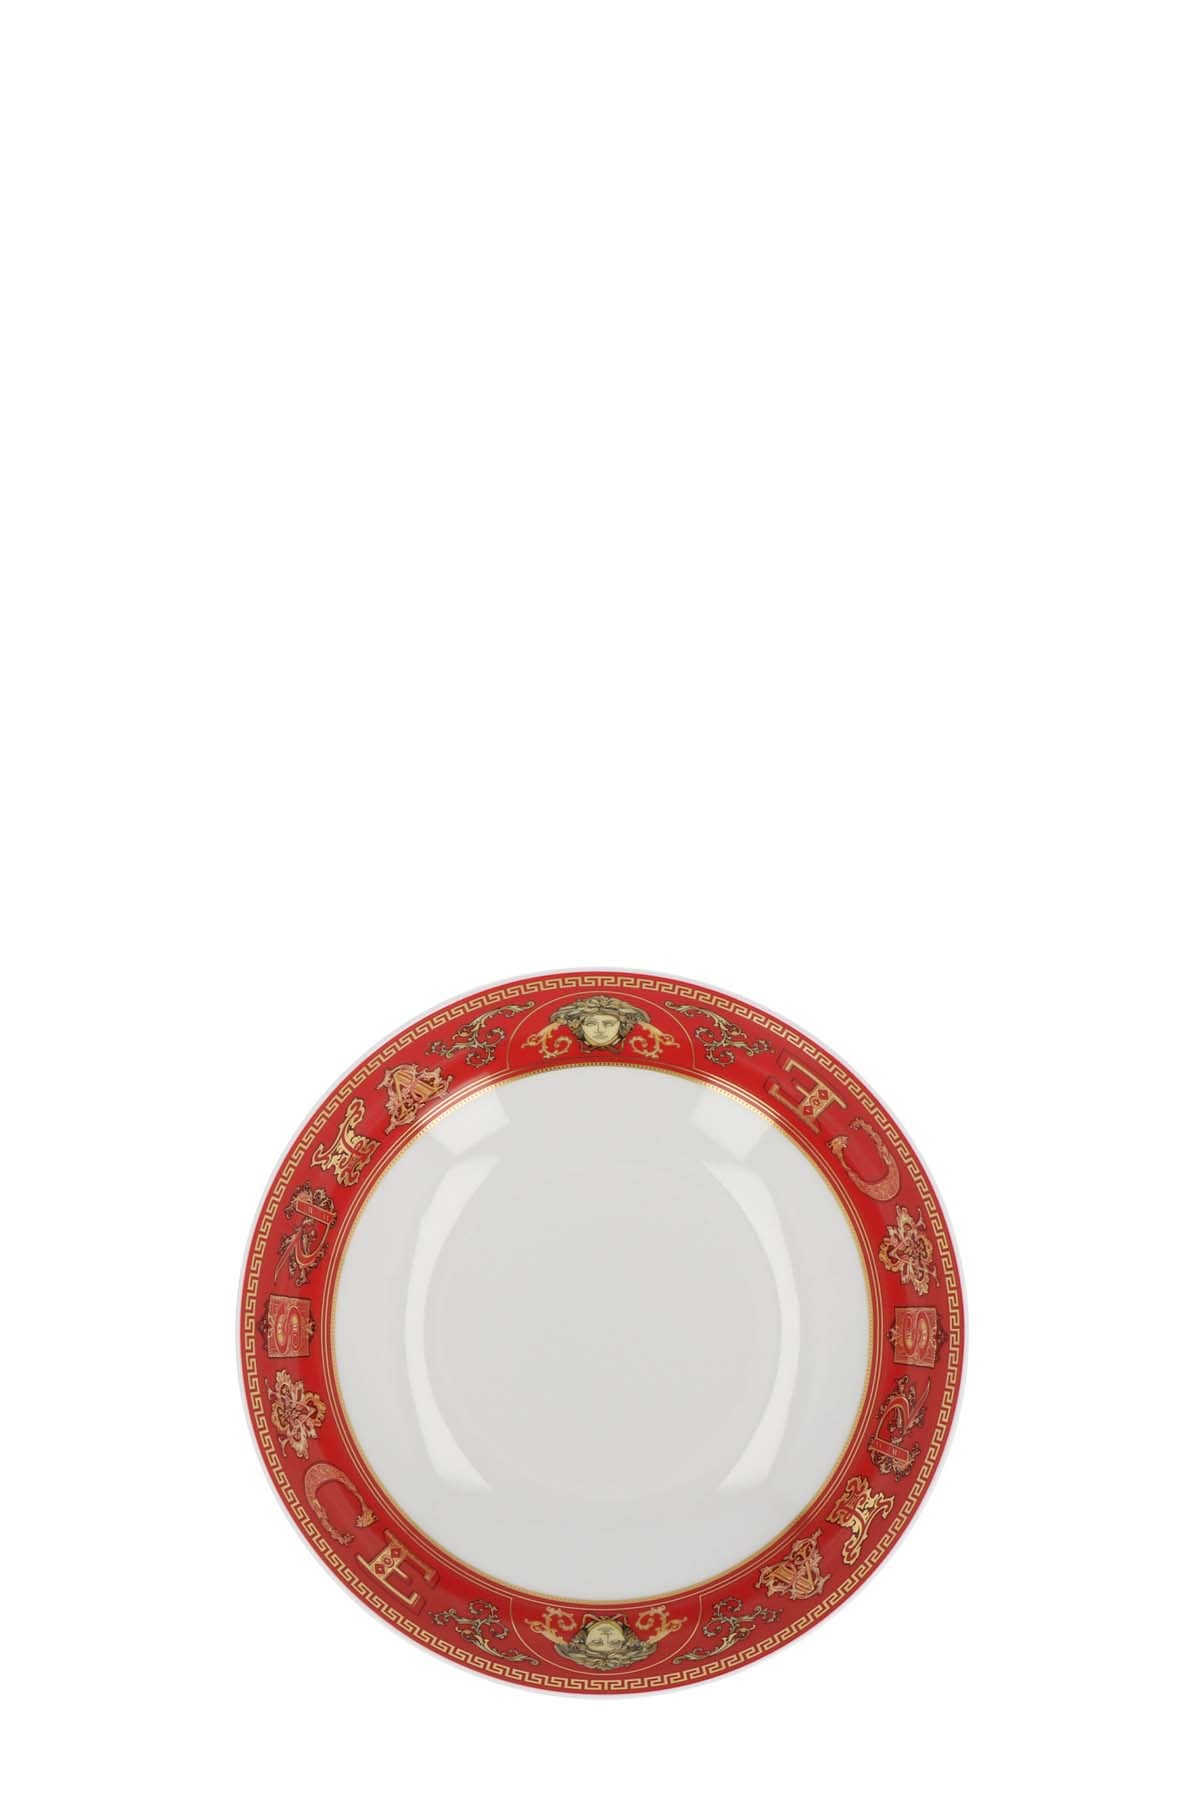 VERSACE HOME 'Versace Christmas’ Soup Plate